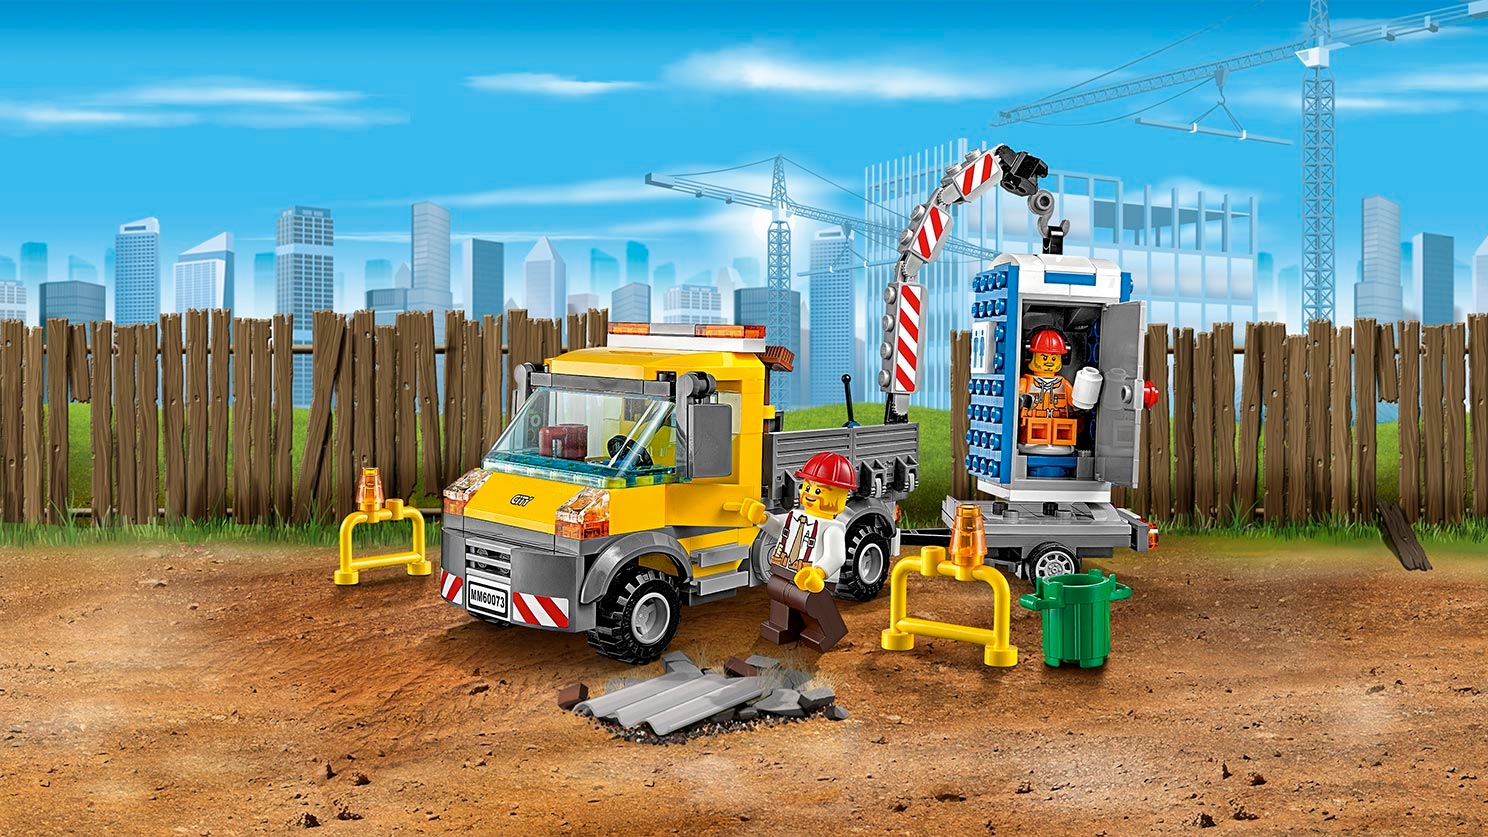 Inspektion Ristede Slip sko Service Truck 60073 - LEGO® City Sets - LEGO.com for kids